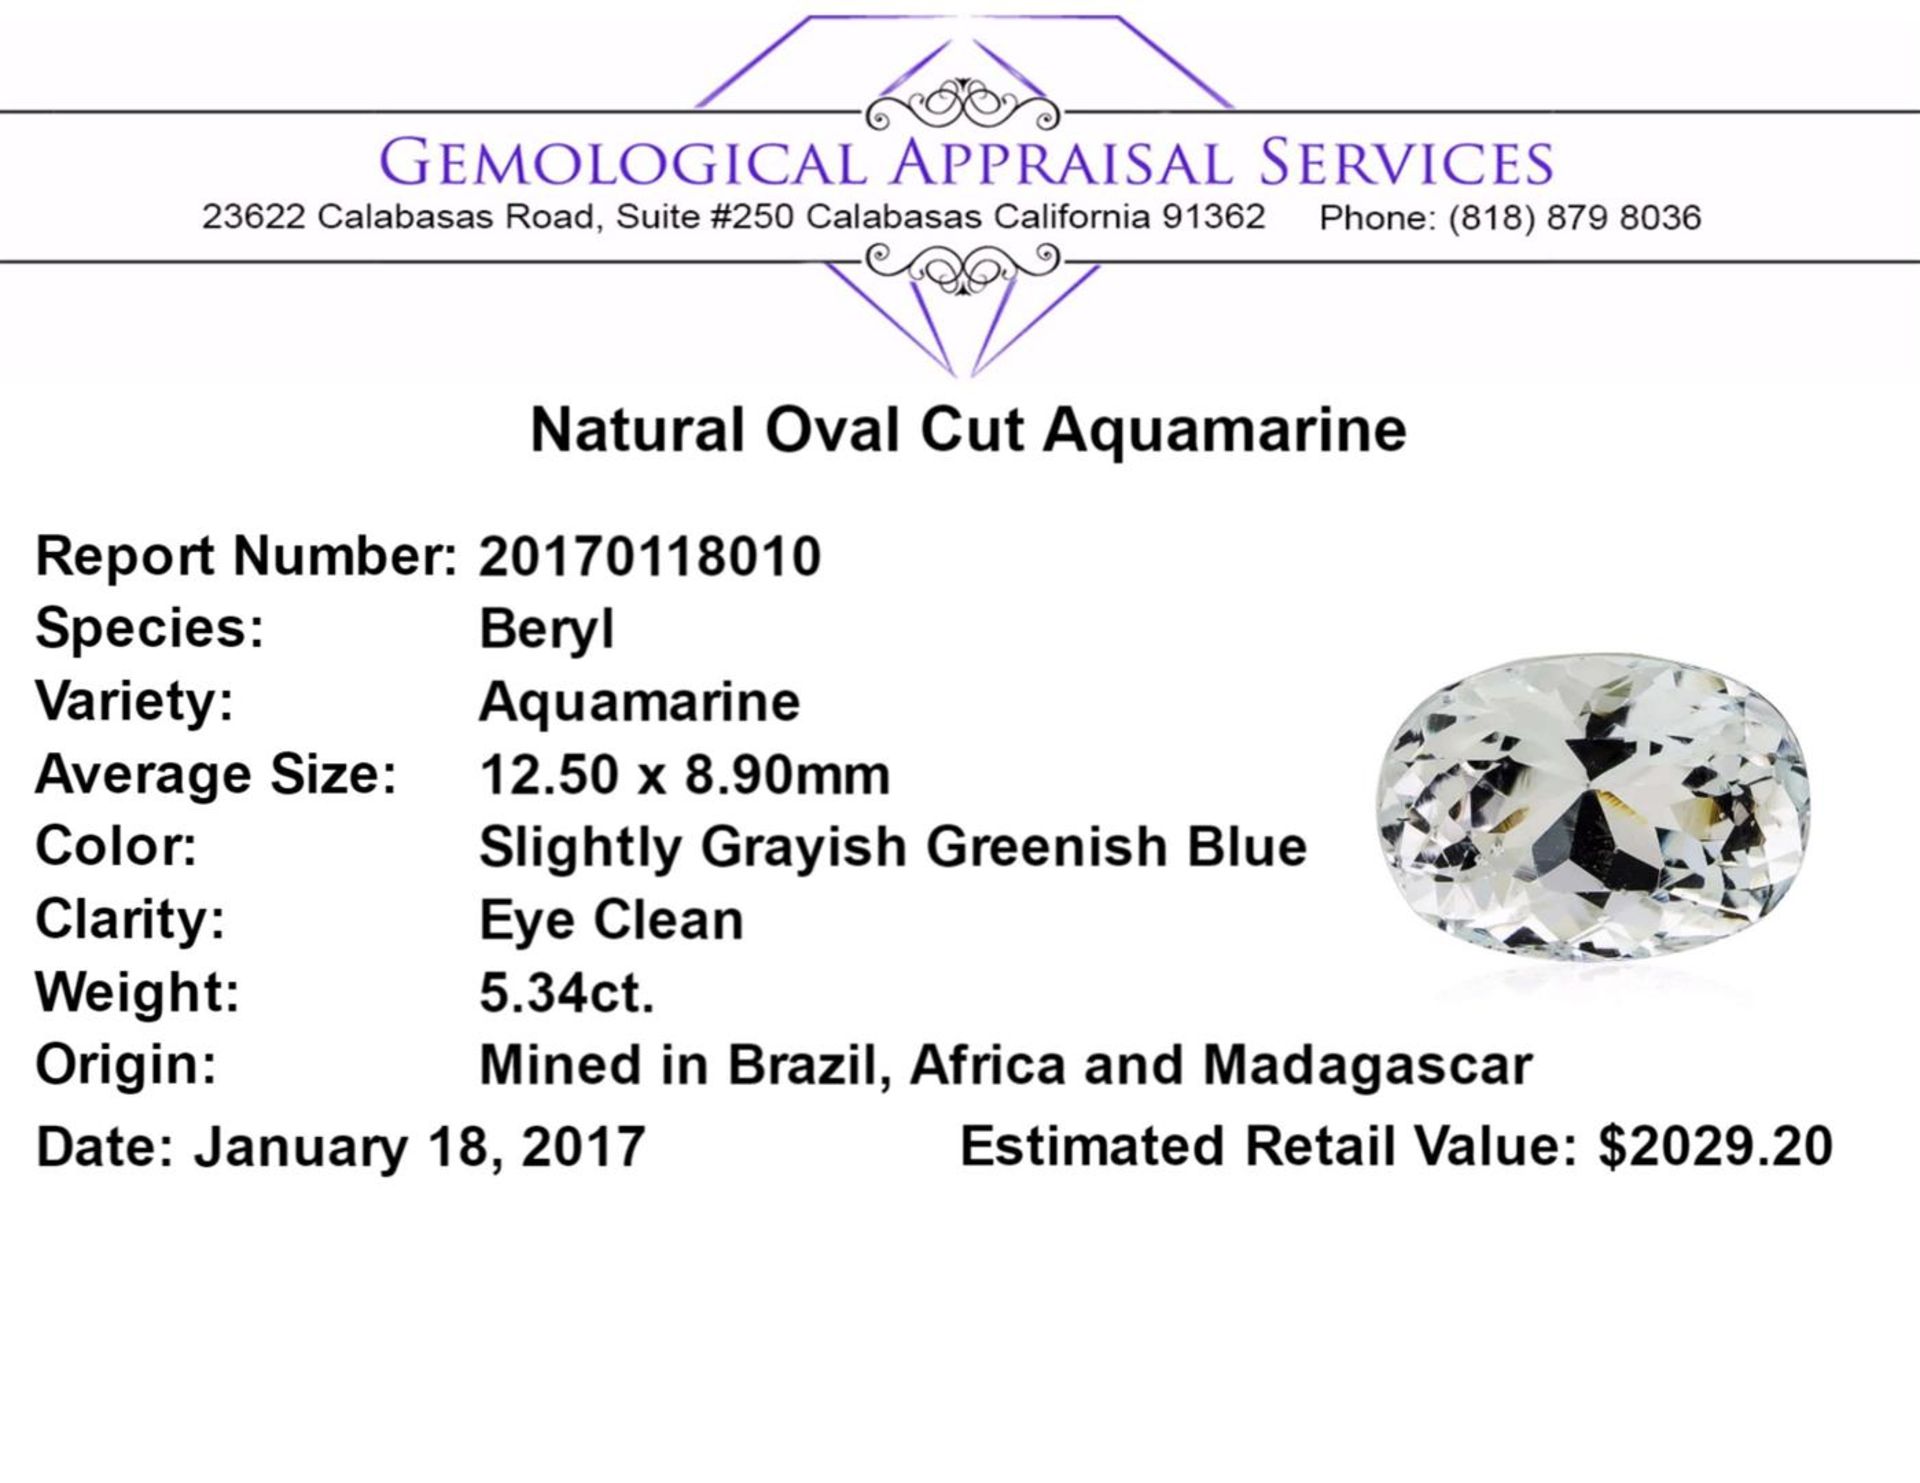 5.34 ct.Natural Oval Cut Aquamarine - Image 2 of 2